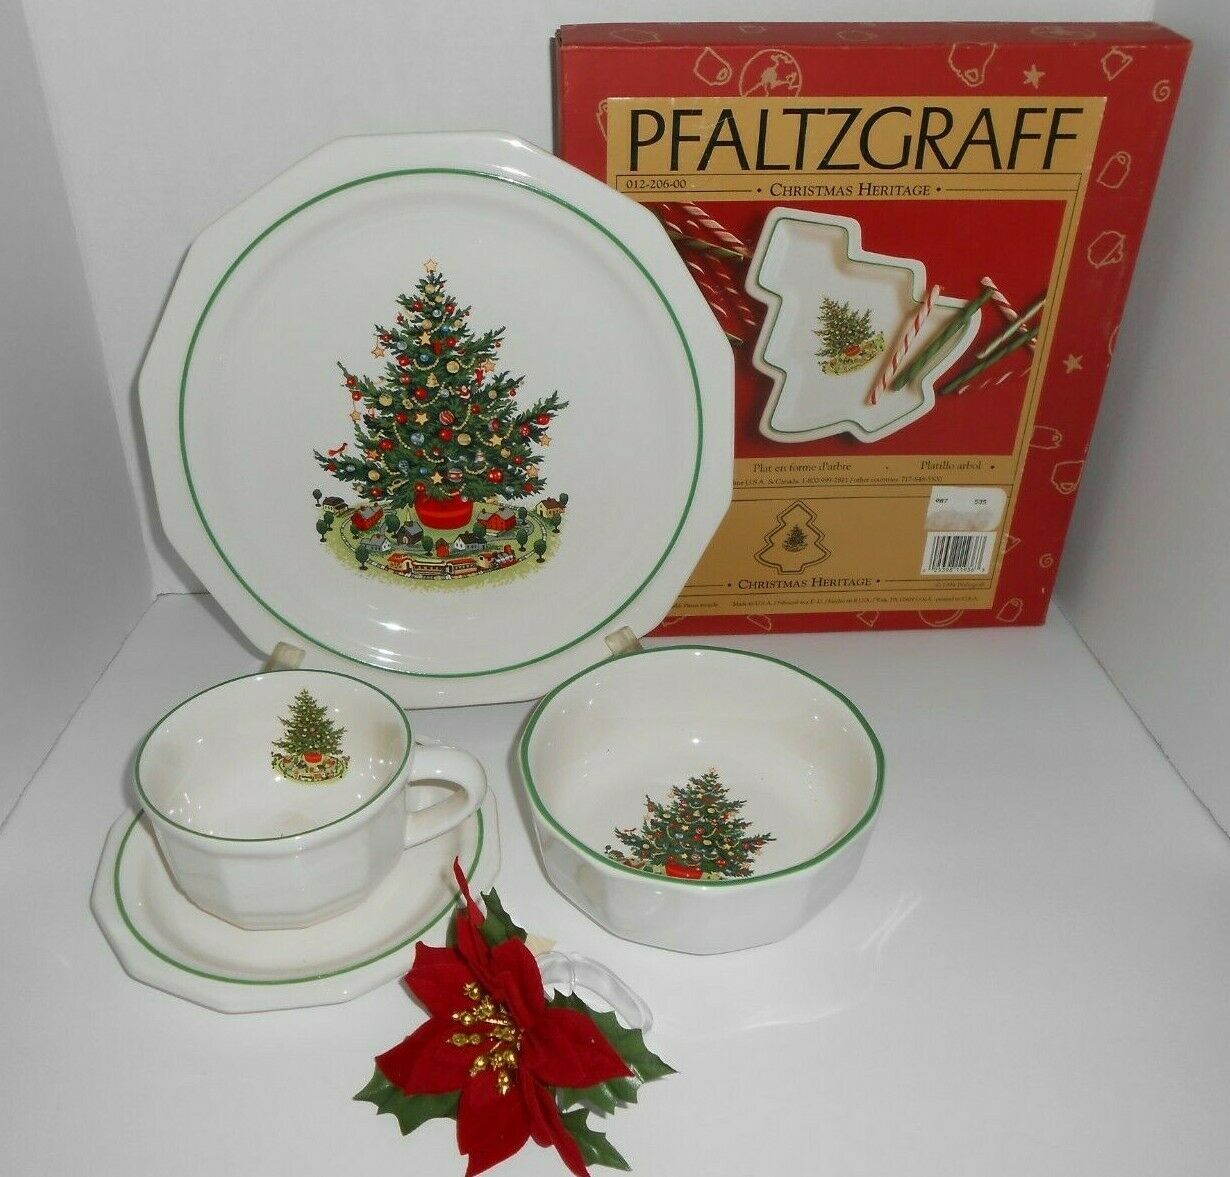 Pfaltzgraff “Christmas Heritage” Dinner Plate